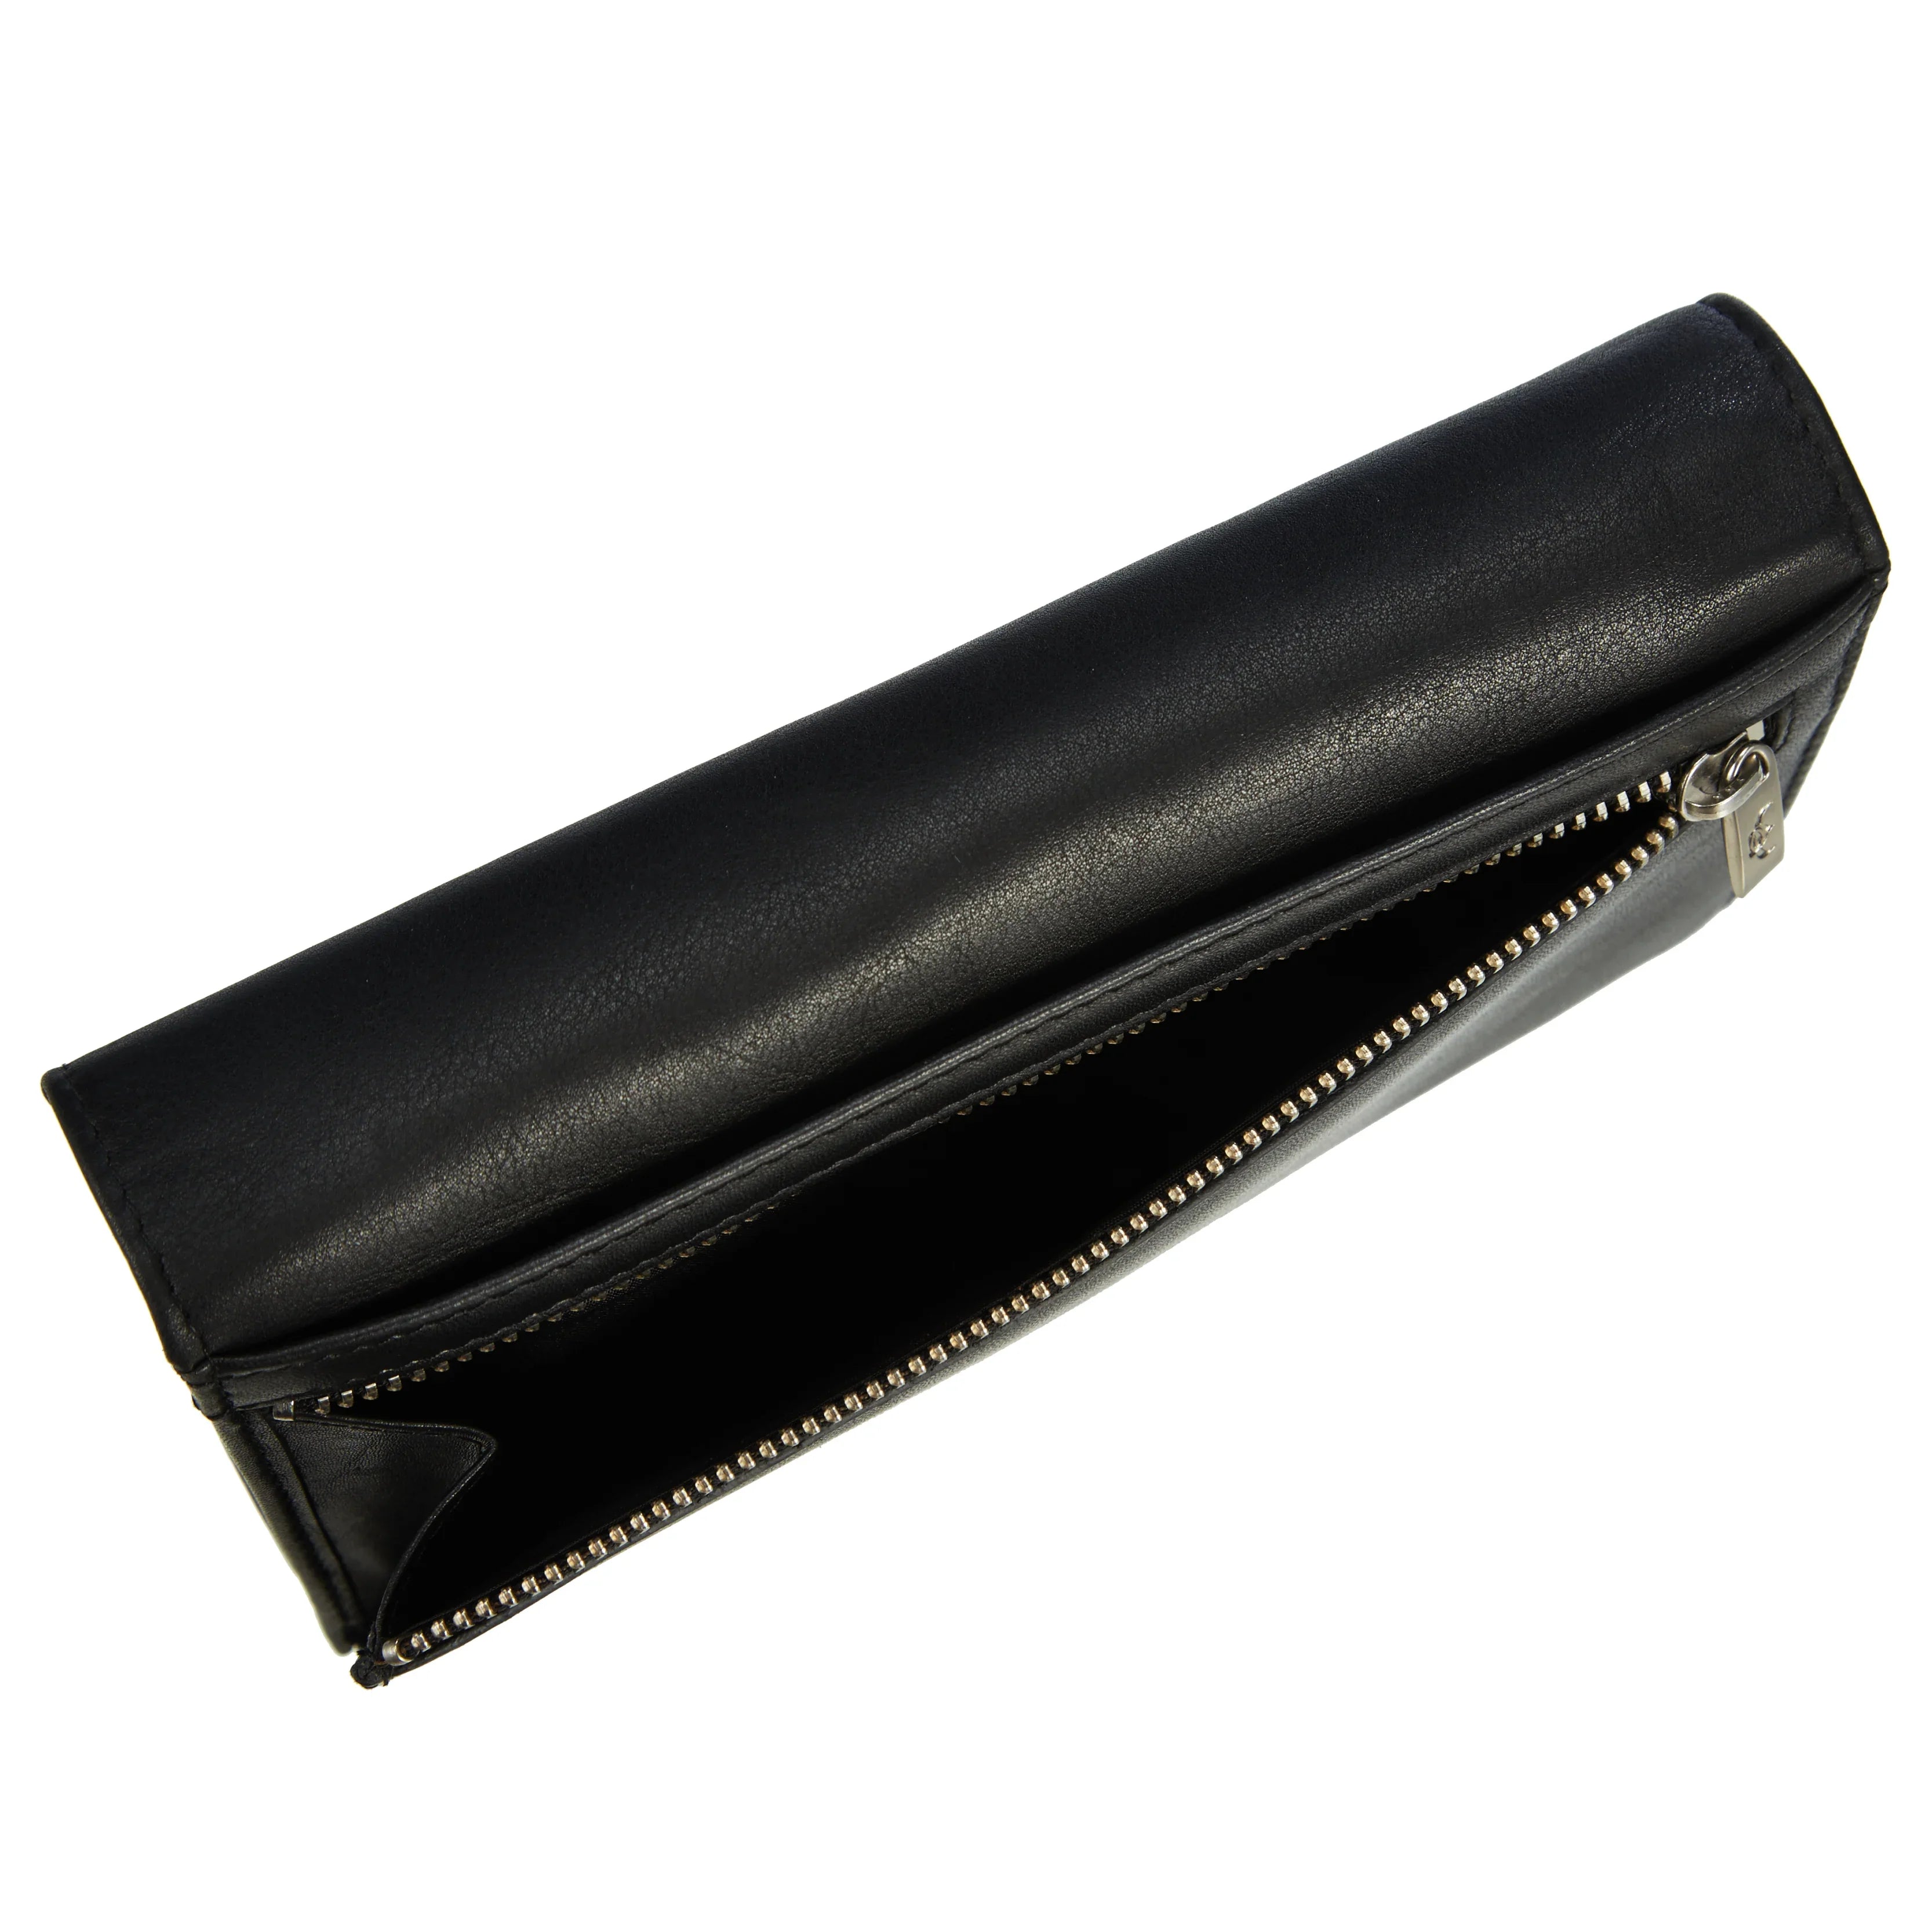 Golden Head Modena ladies' wallet 18 cm - black